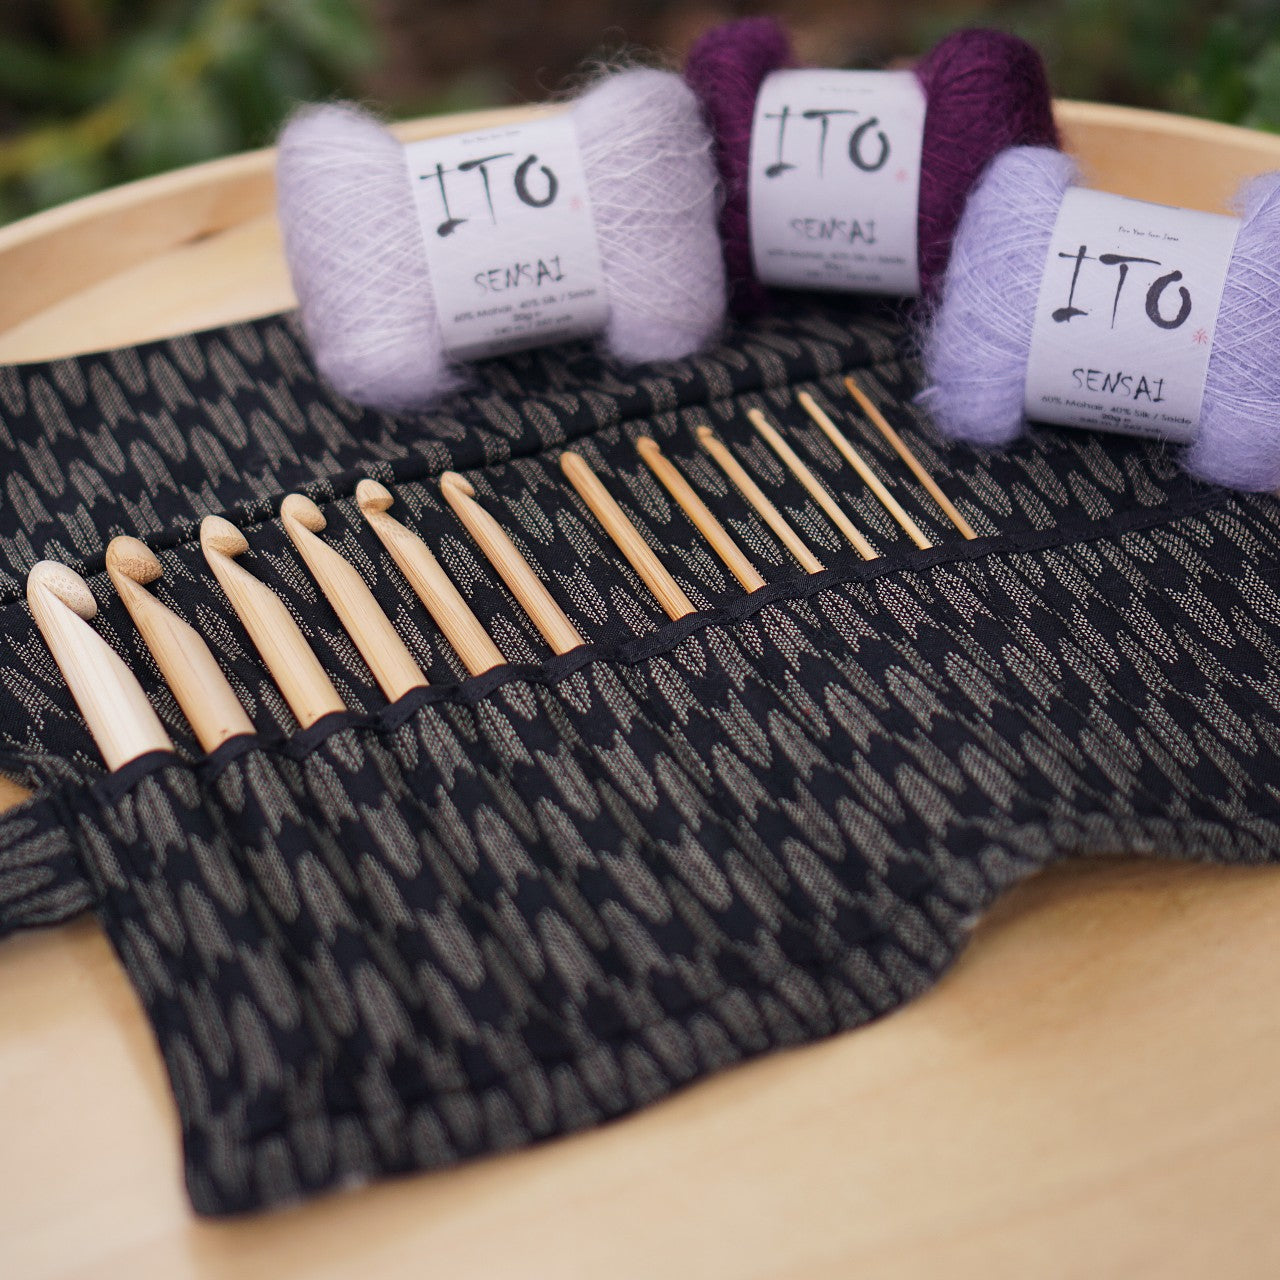 Loops & Threads Steel Crochet Hook Set - Each